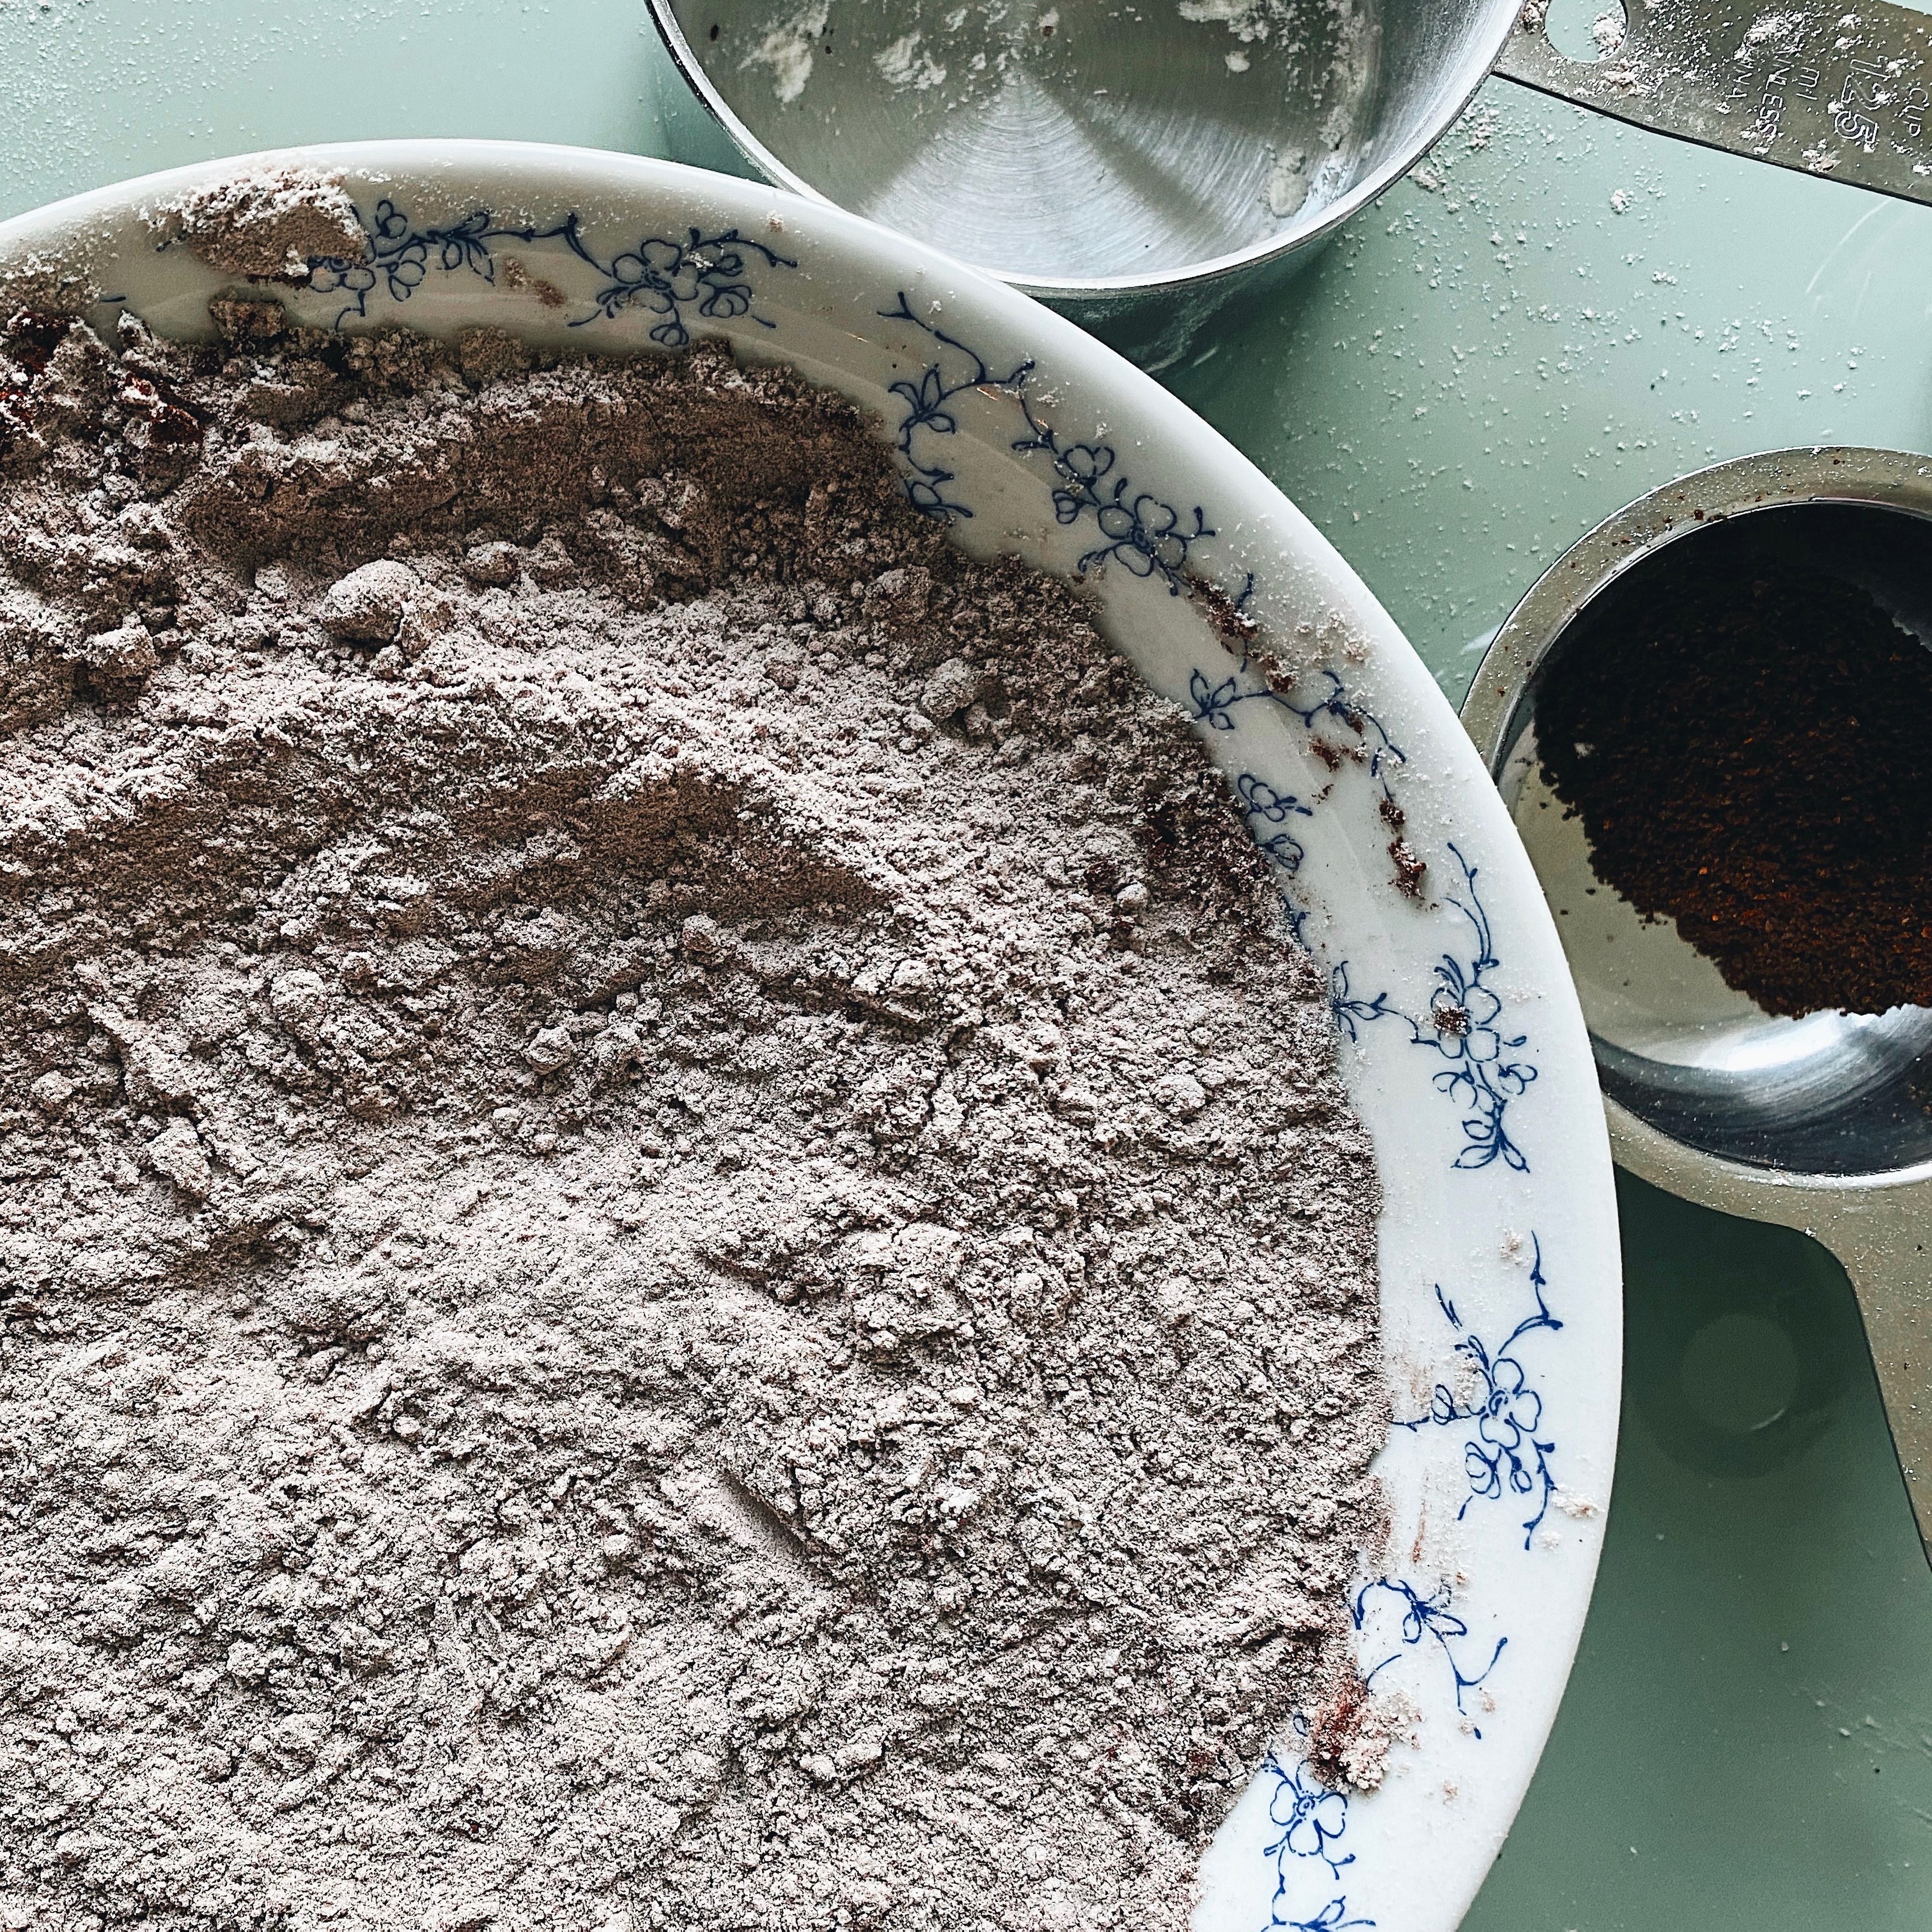 Mix cocoa powder, flour, baking soda, salt and espresso powder in a separate bowl.